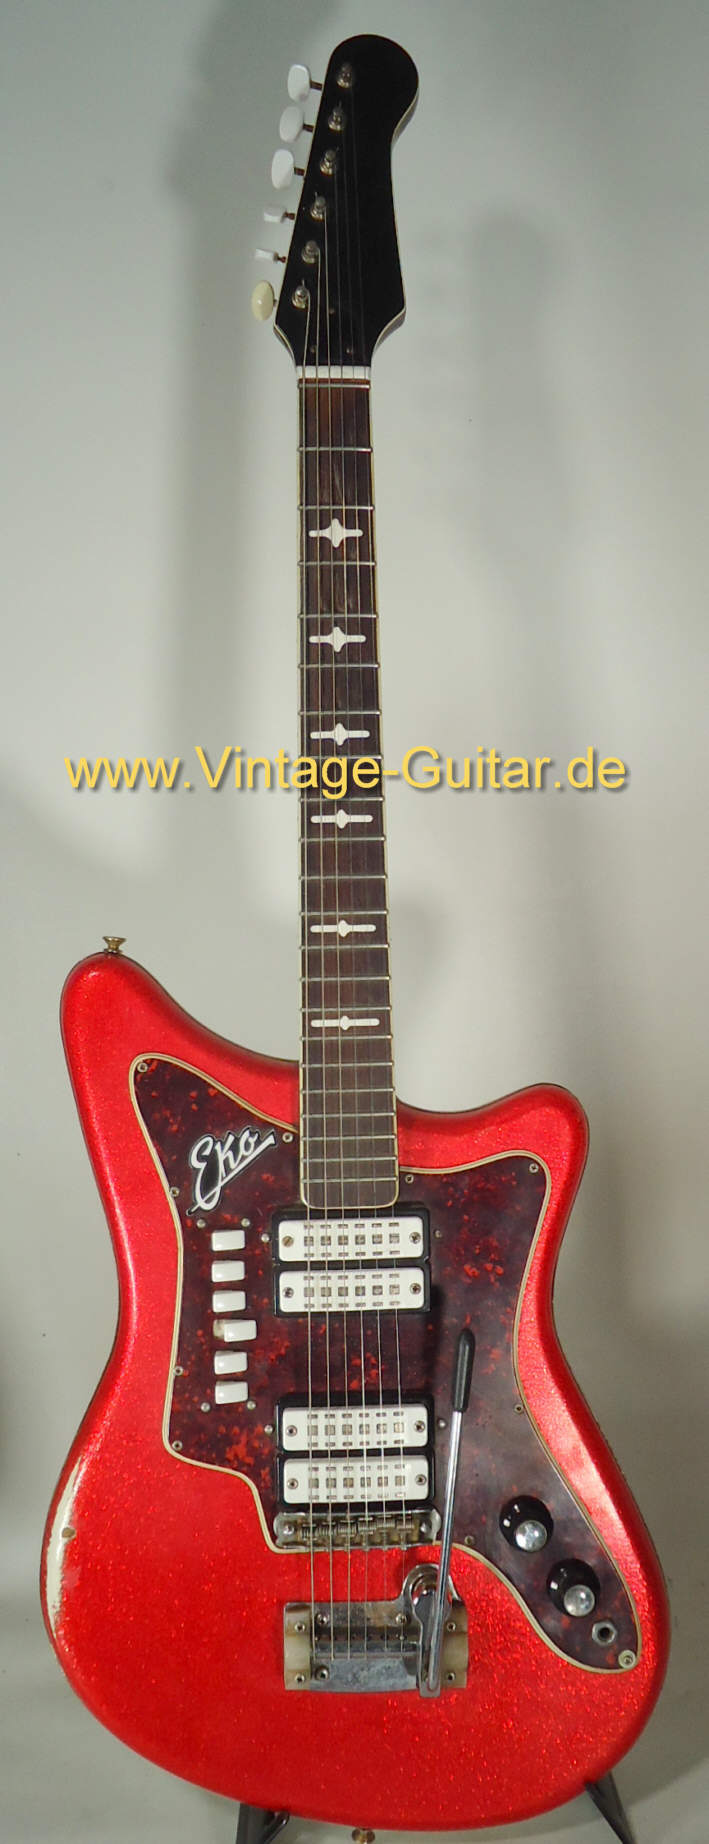 Eko 500 4V guitar a.jpg